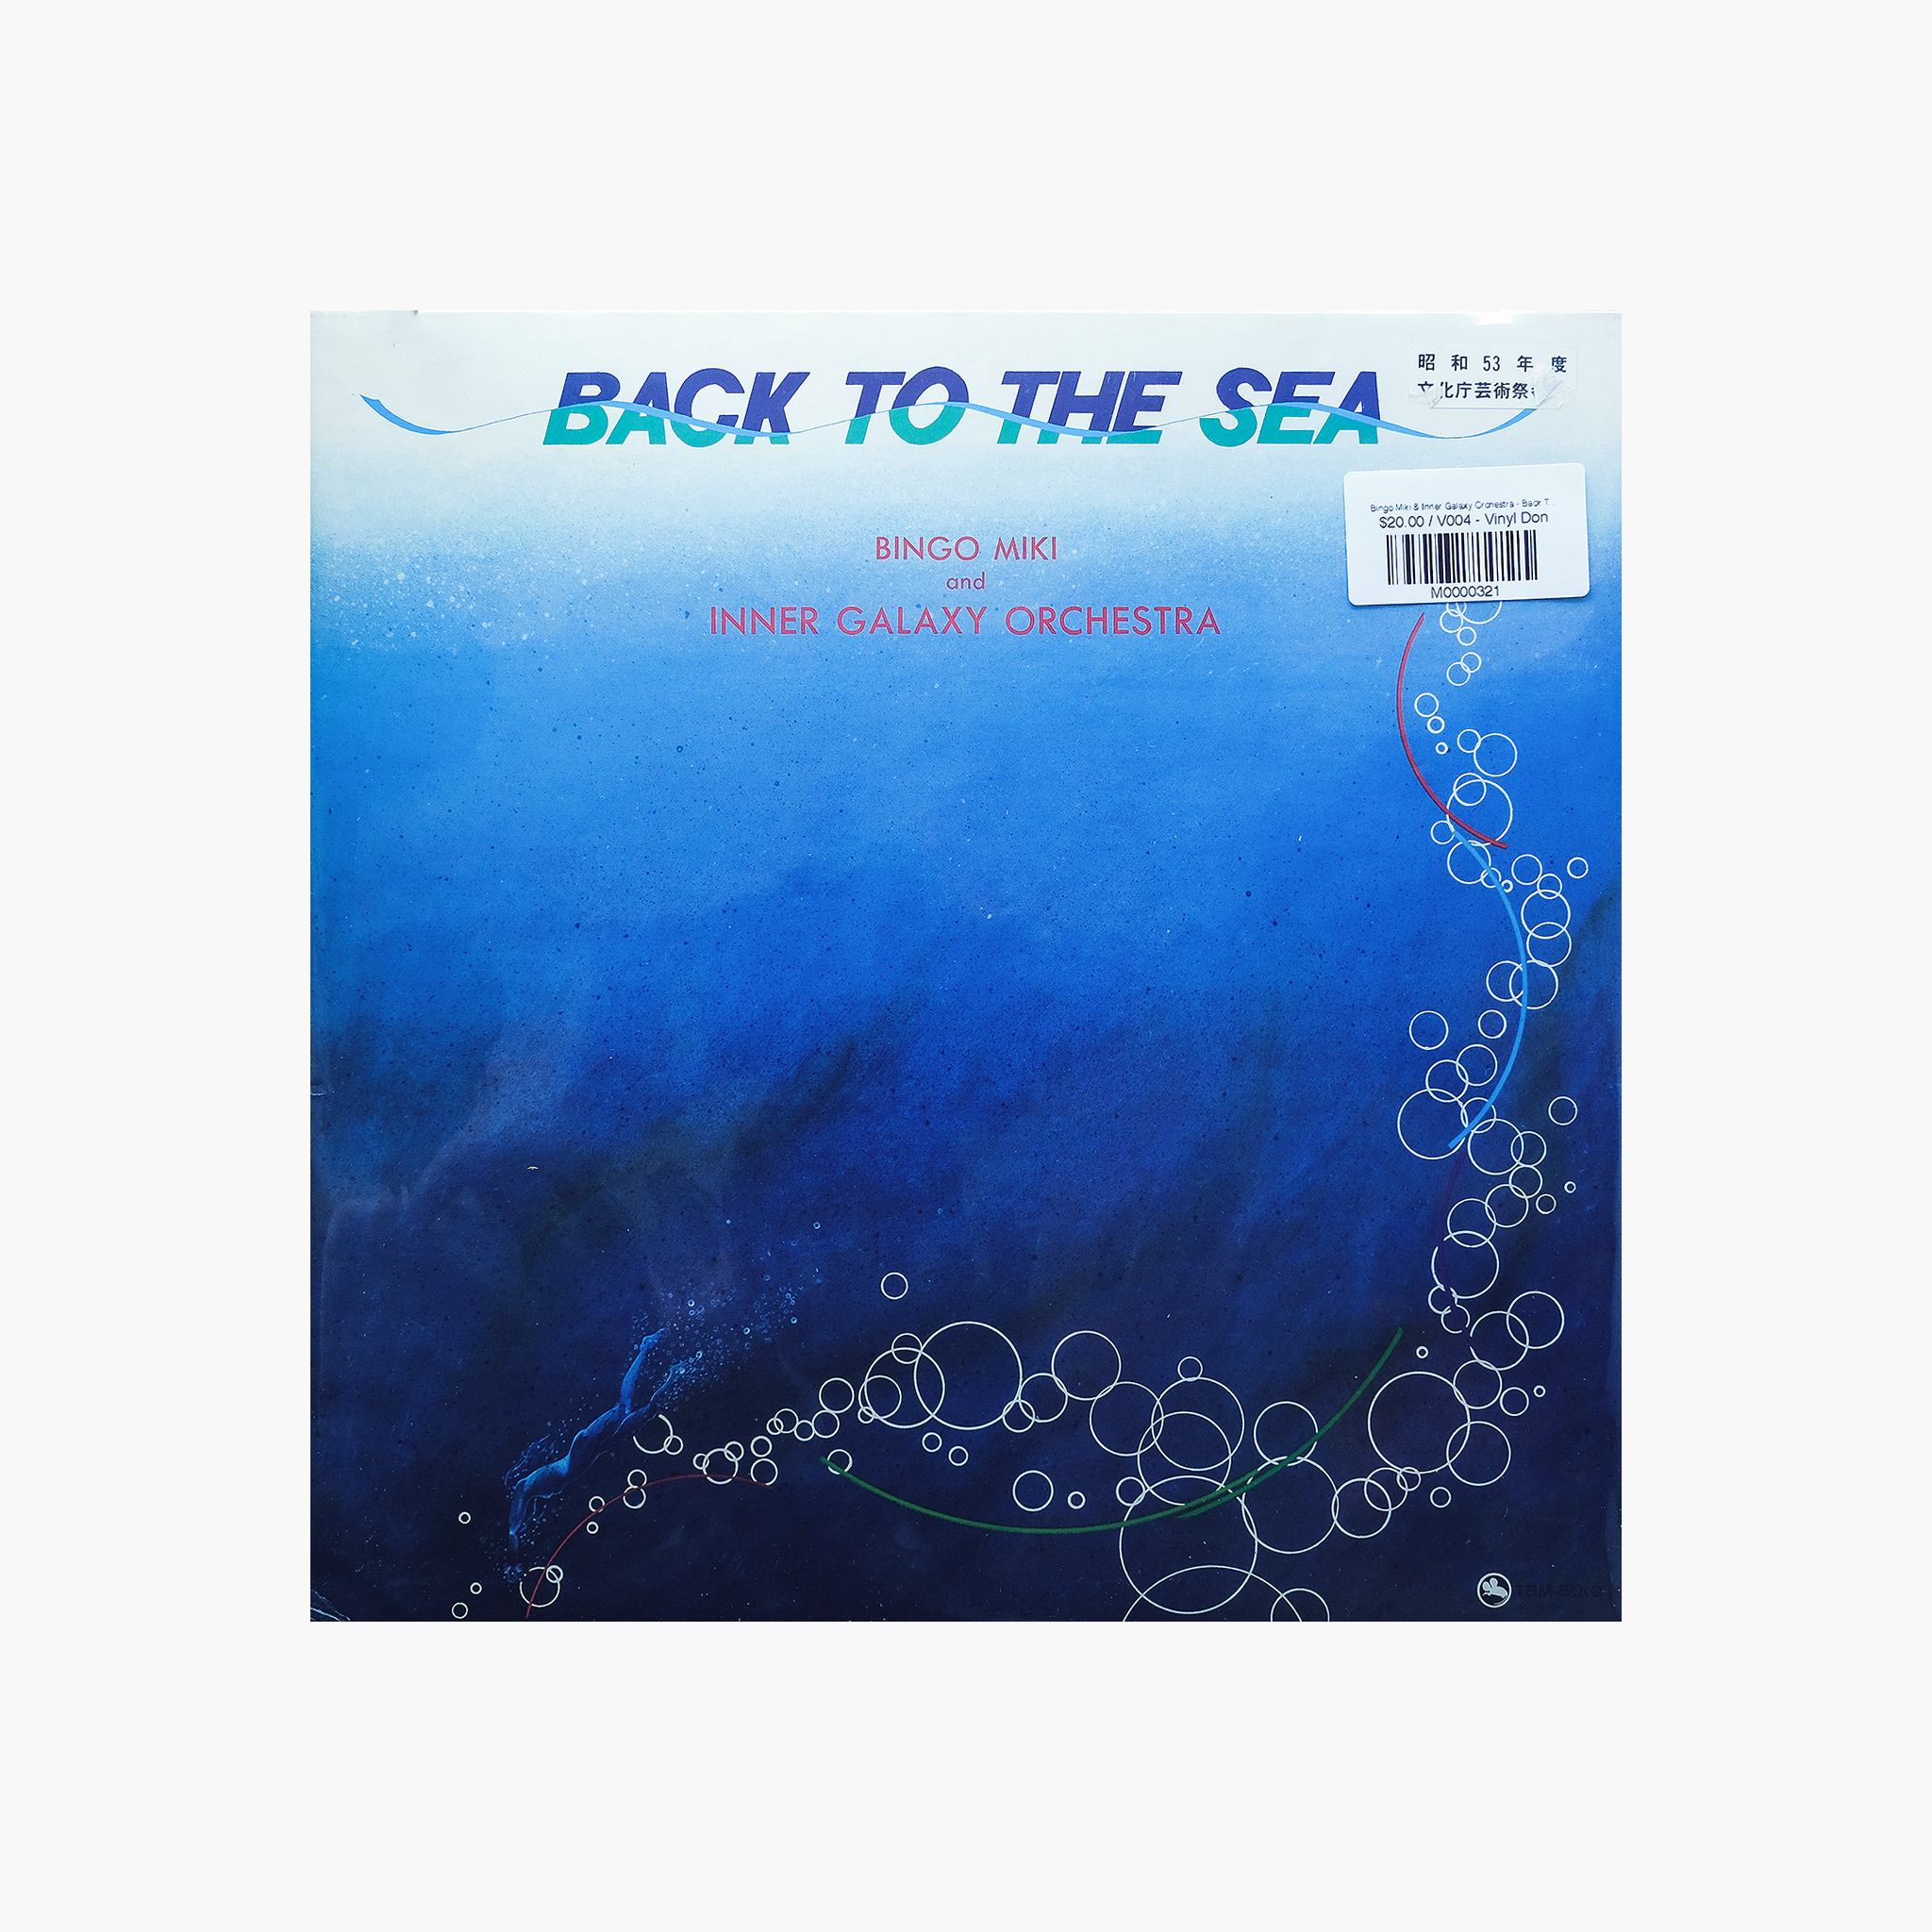 Bingo Miki & Inner Galaxy Orchestra - Back To The Sea